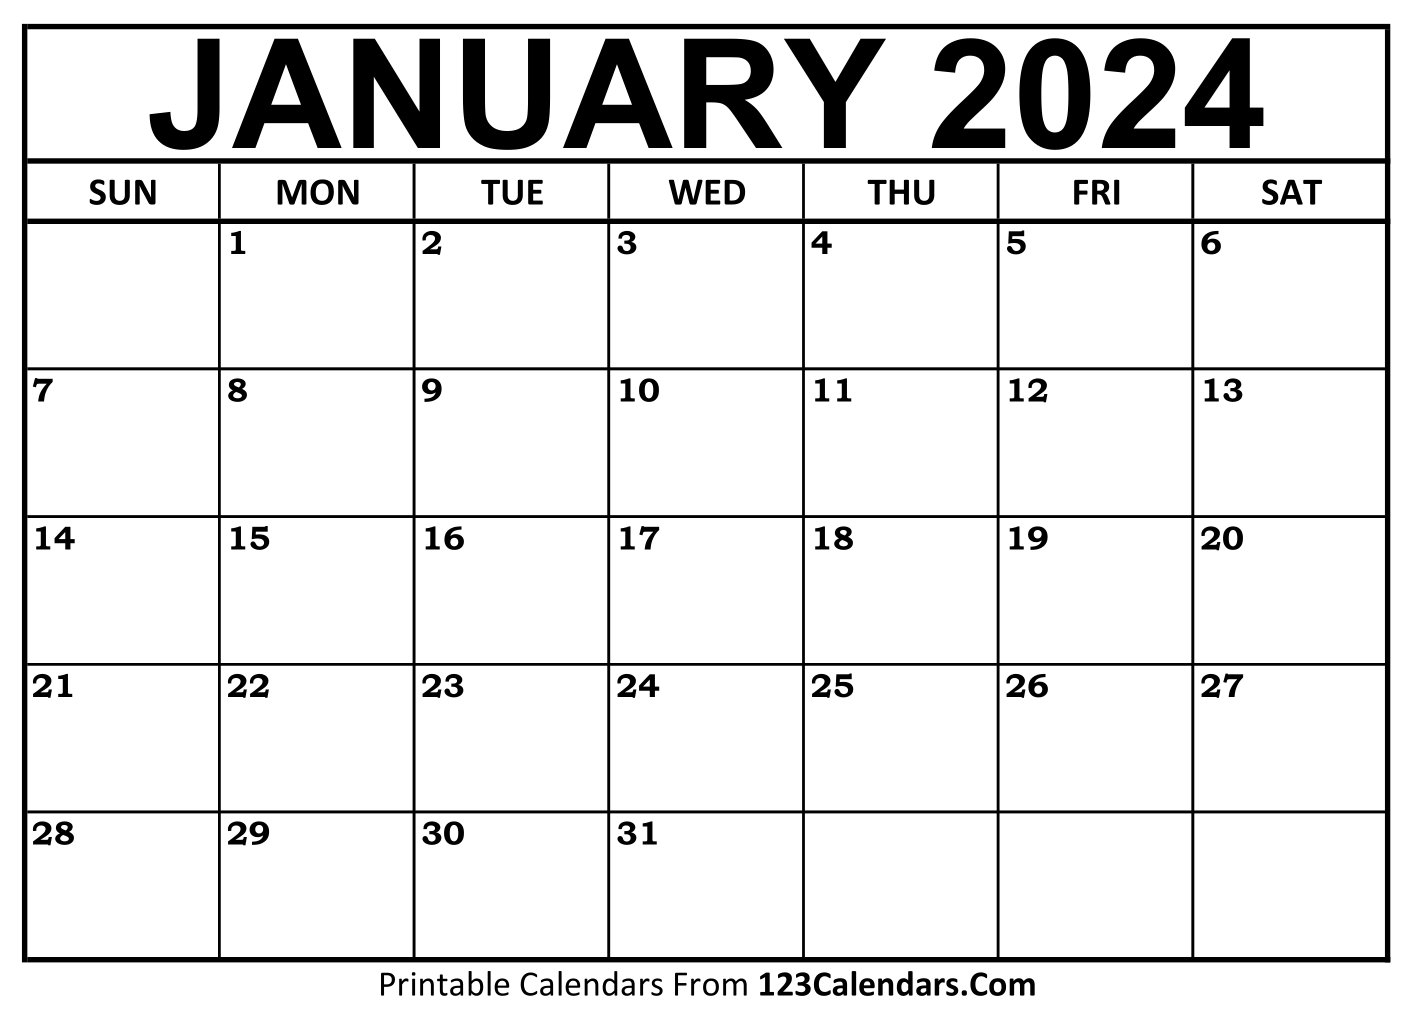 Printable January 2024 Calendar Templates - 123Calendars for January Calendar 2024 Free Printable